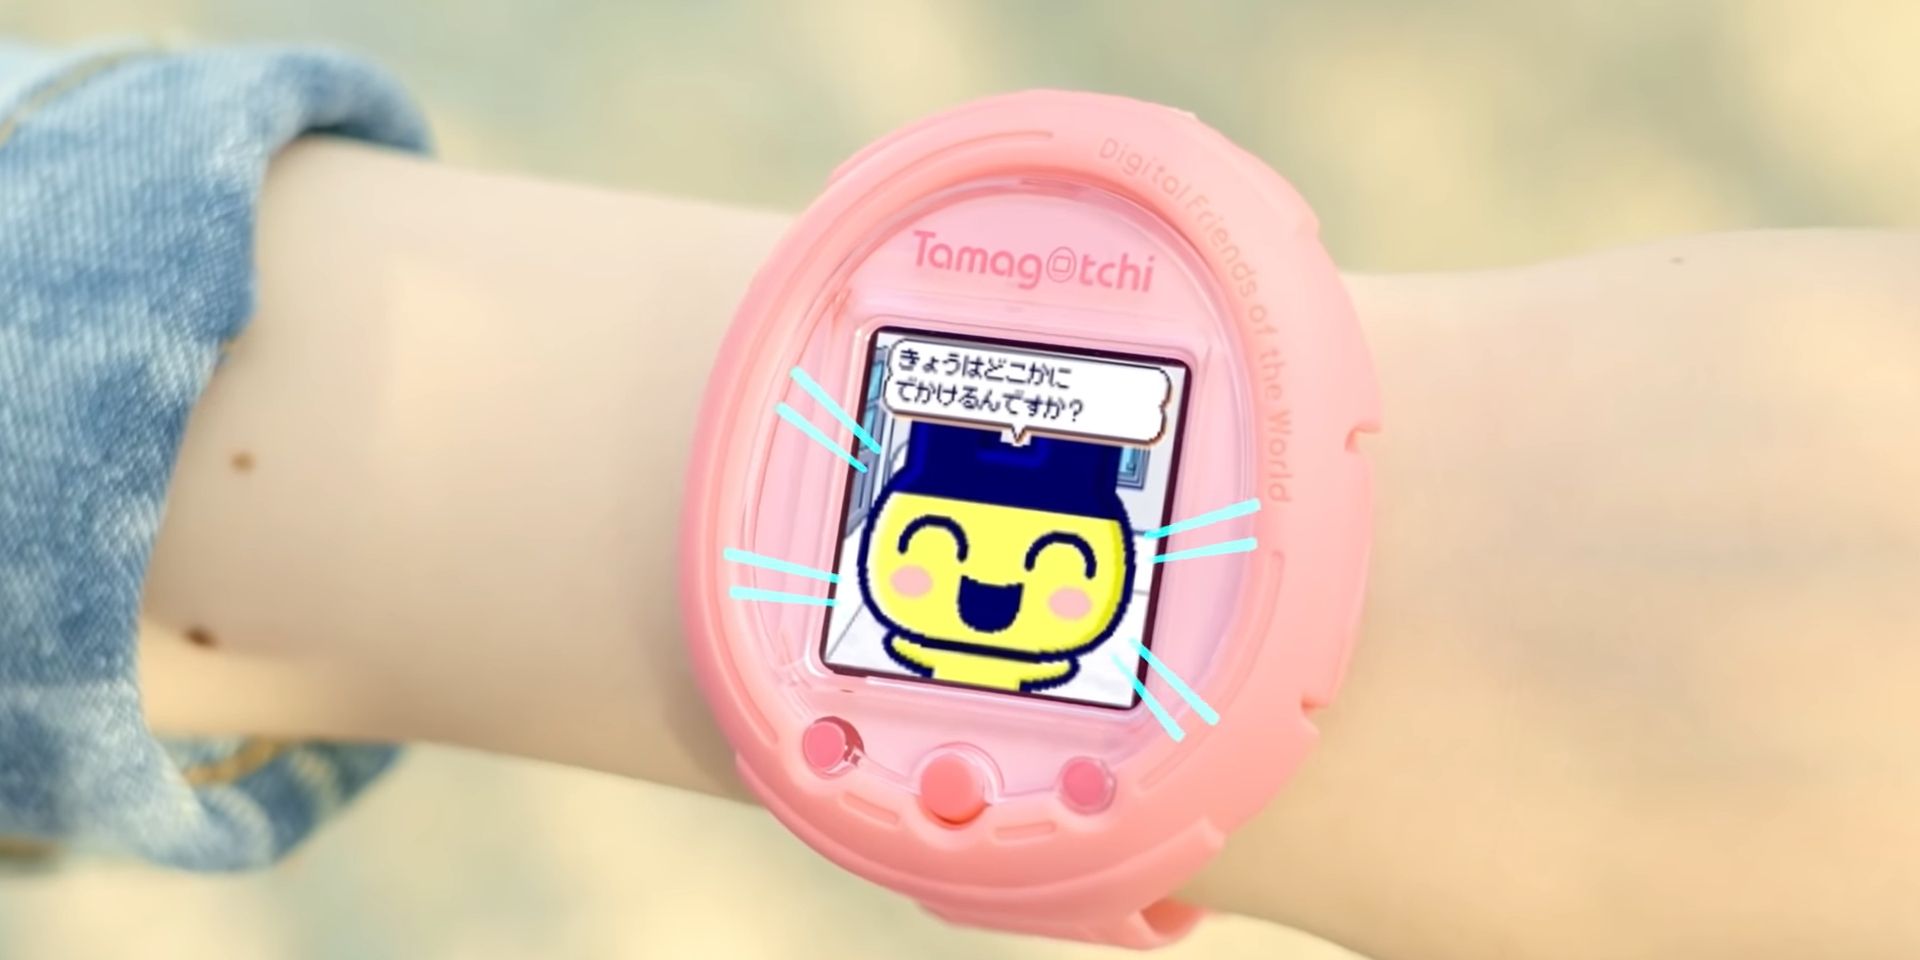 Tamagotchi Smart smartwatch